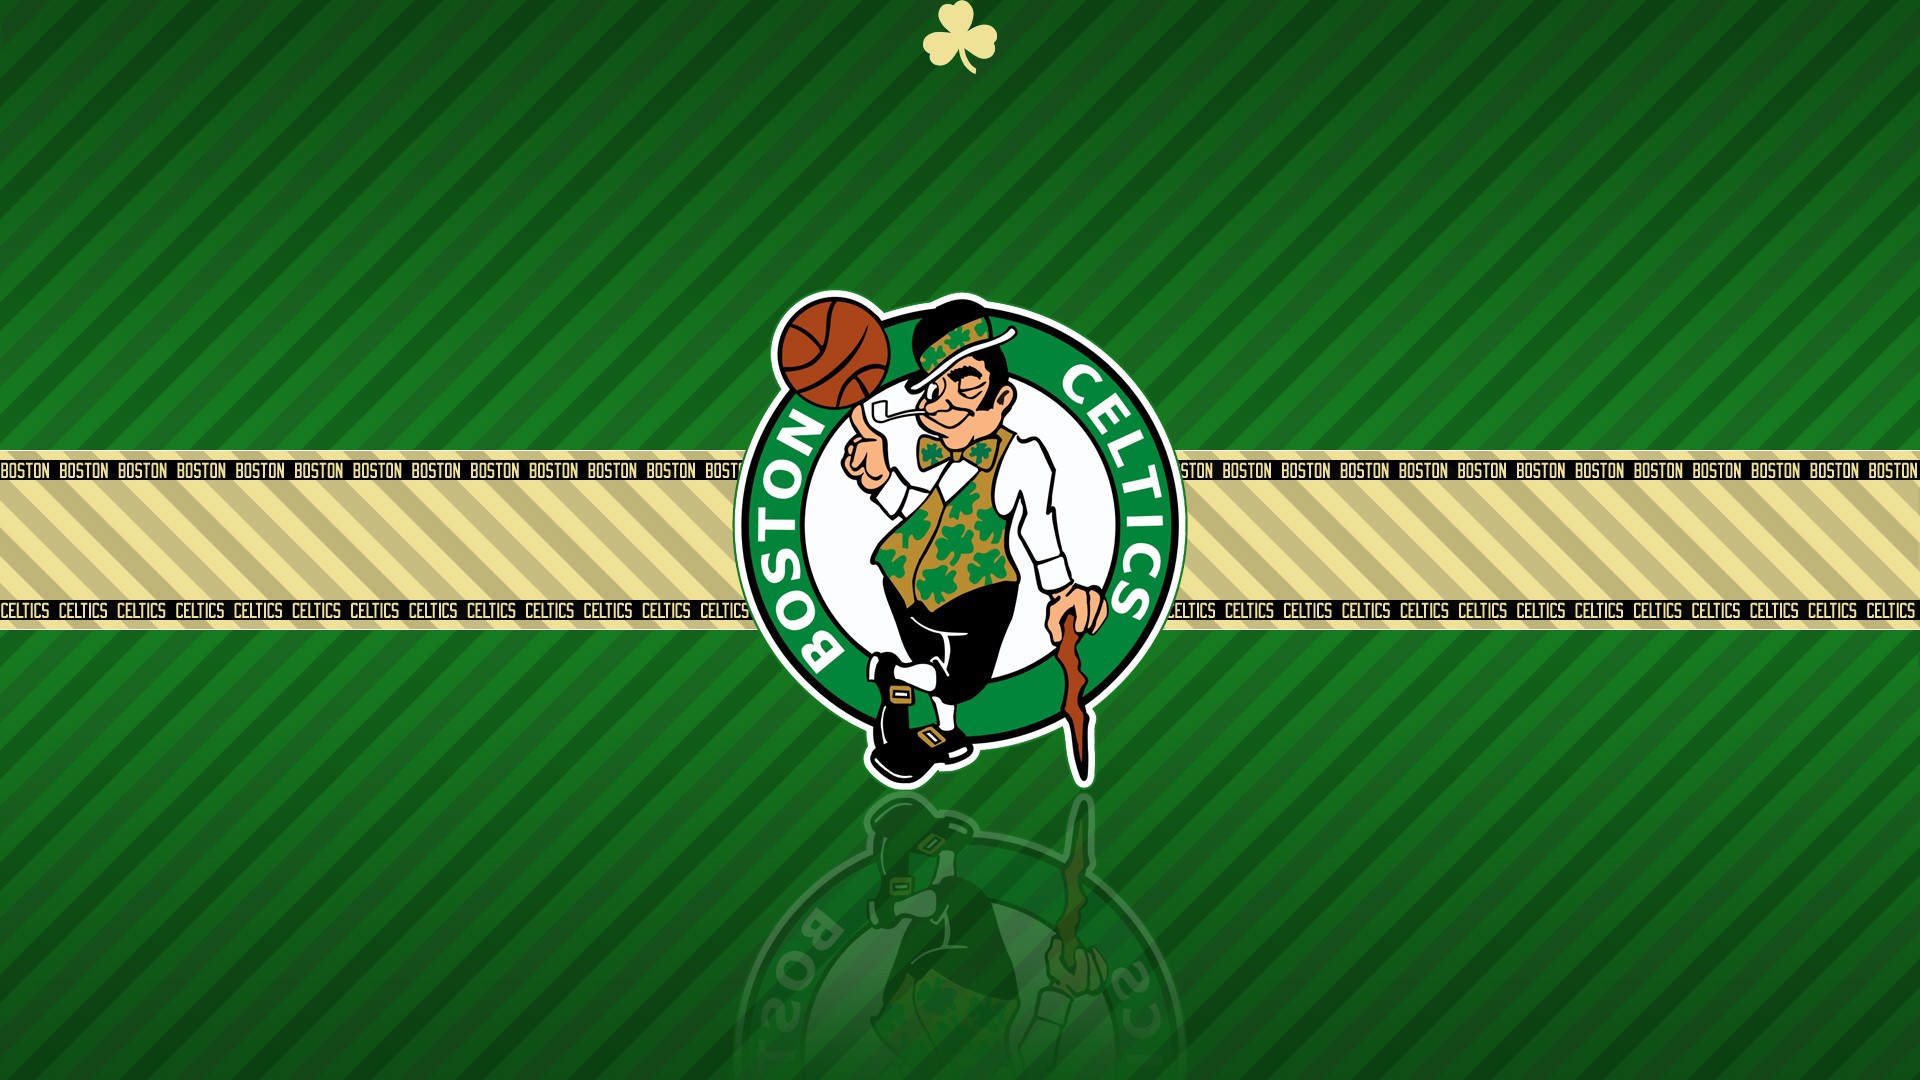 Boston Celtics Wallpaper. 